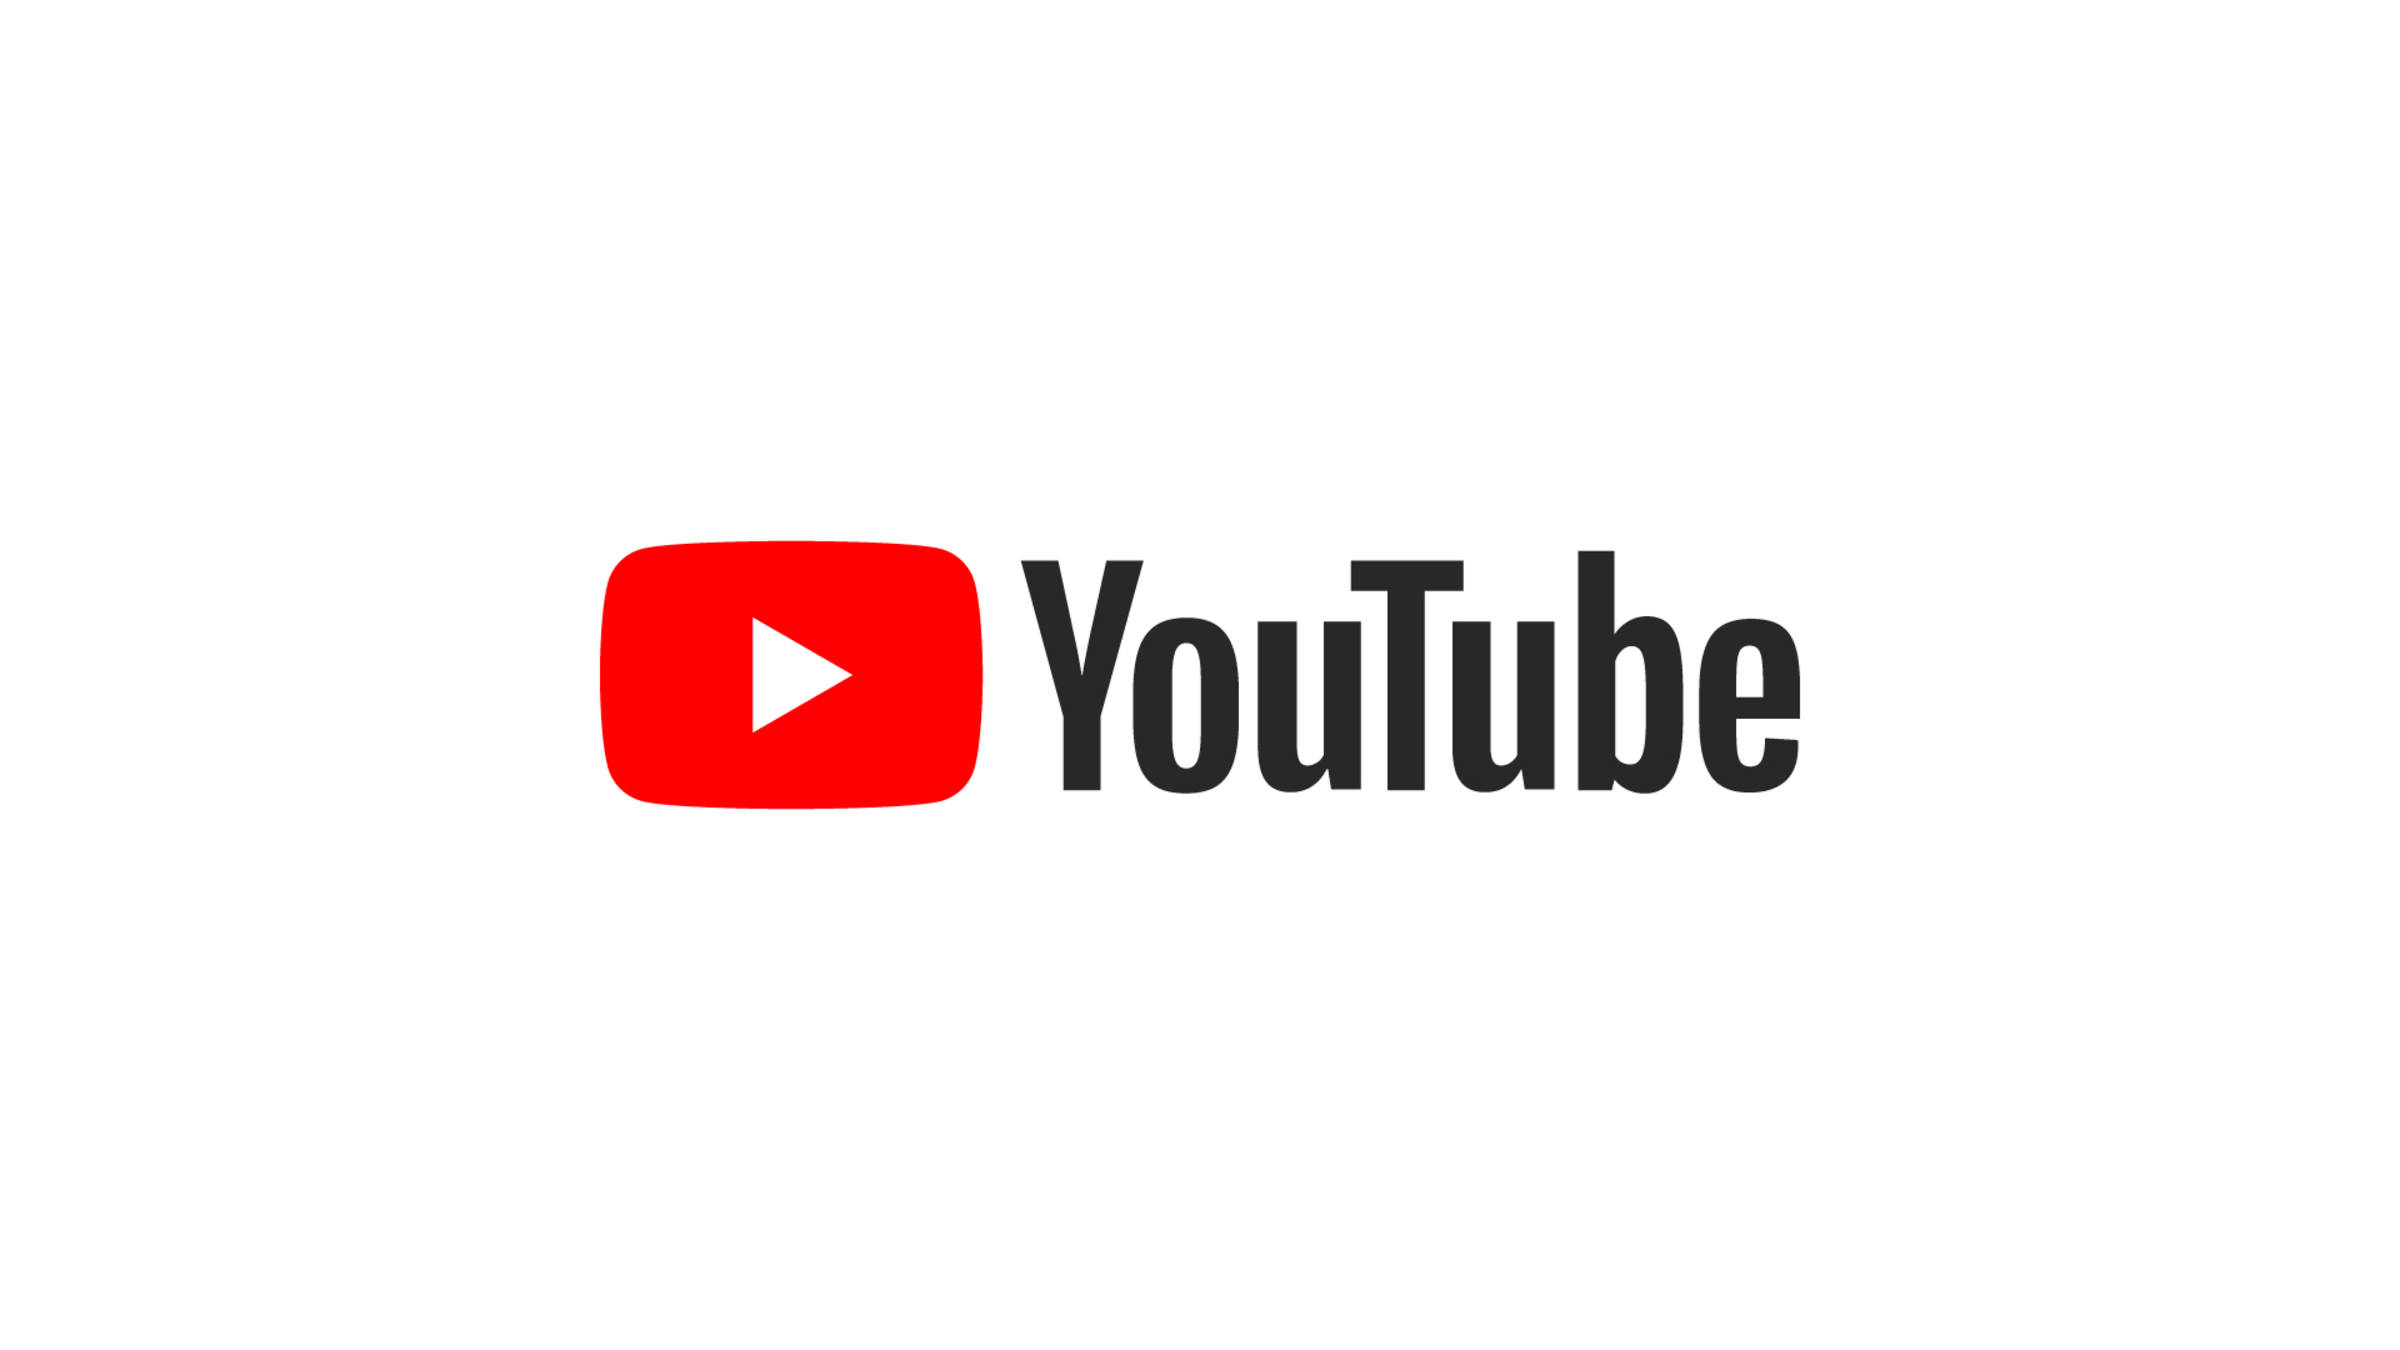 Старый лого ютуба. Youtube лого. Ютуб картинки. Yutuk. Старыг логотип ютуба.